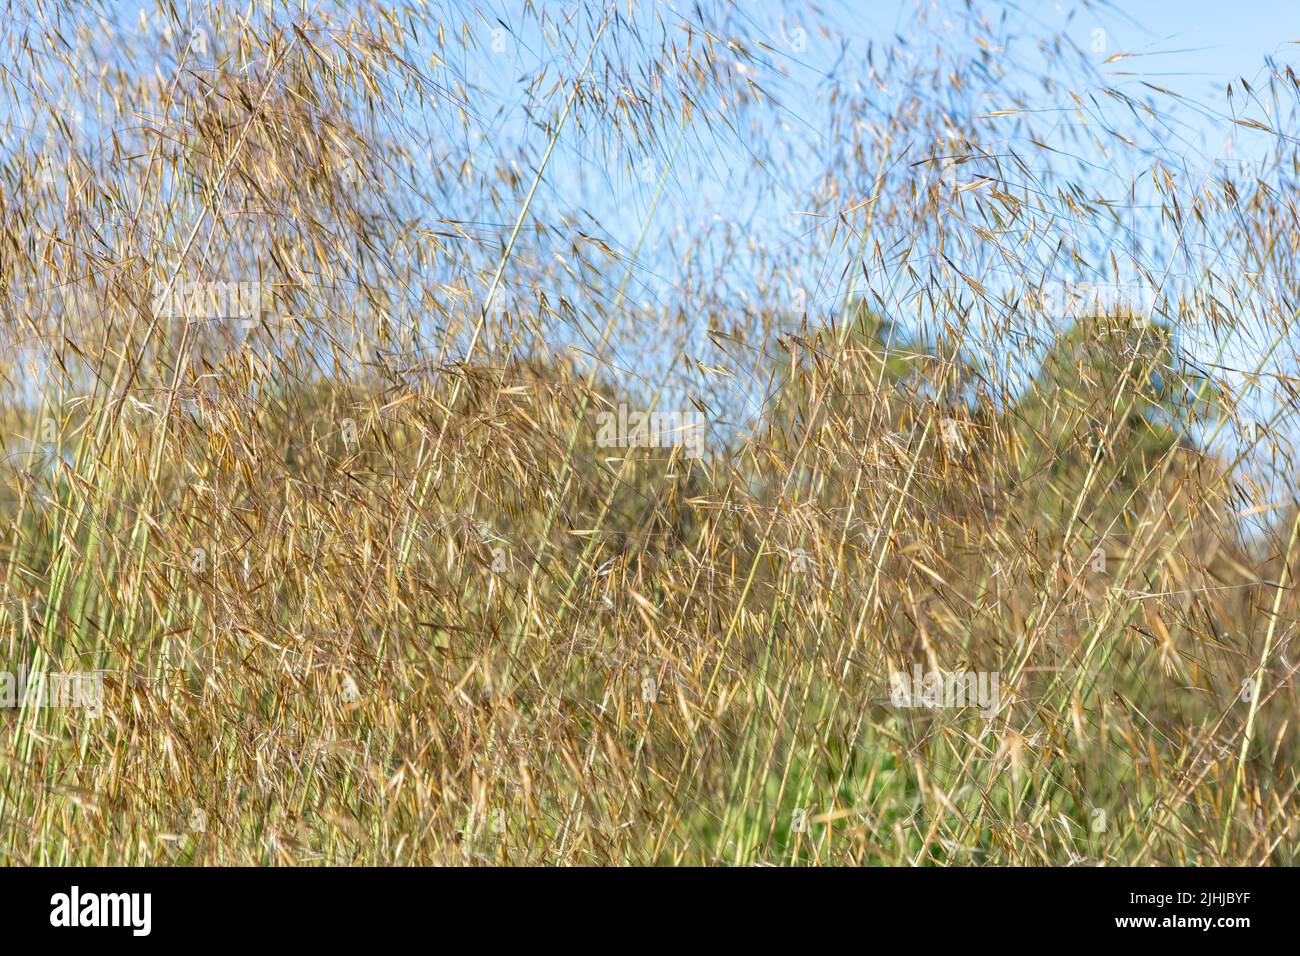 Stipa gigantea / golden oats, ornamental grass in flower, catching movement of wind Stock Photo